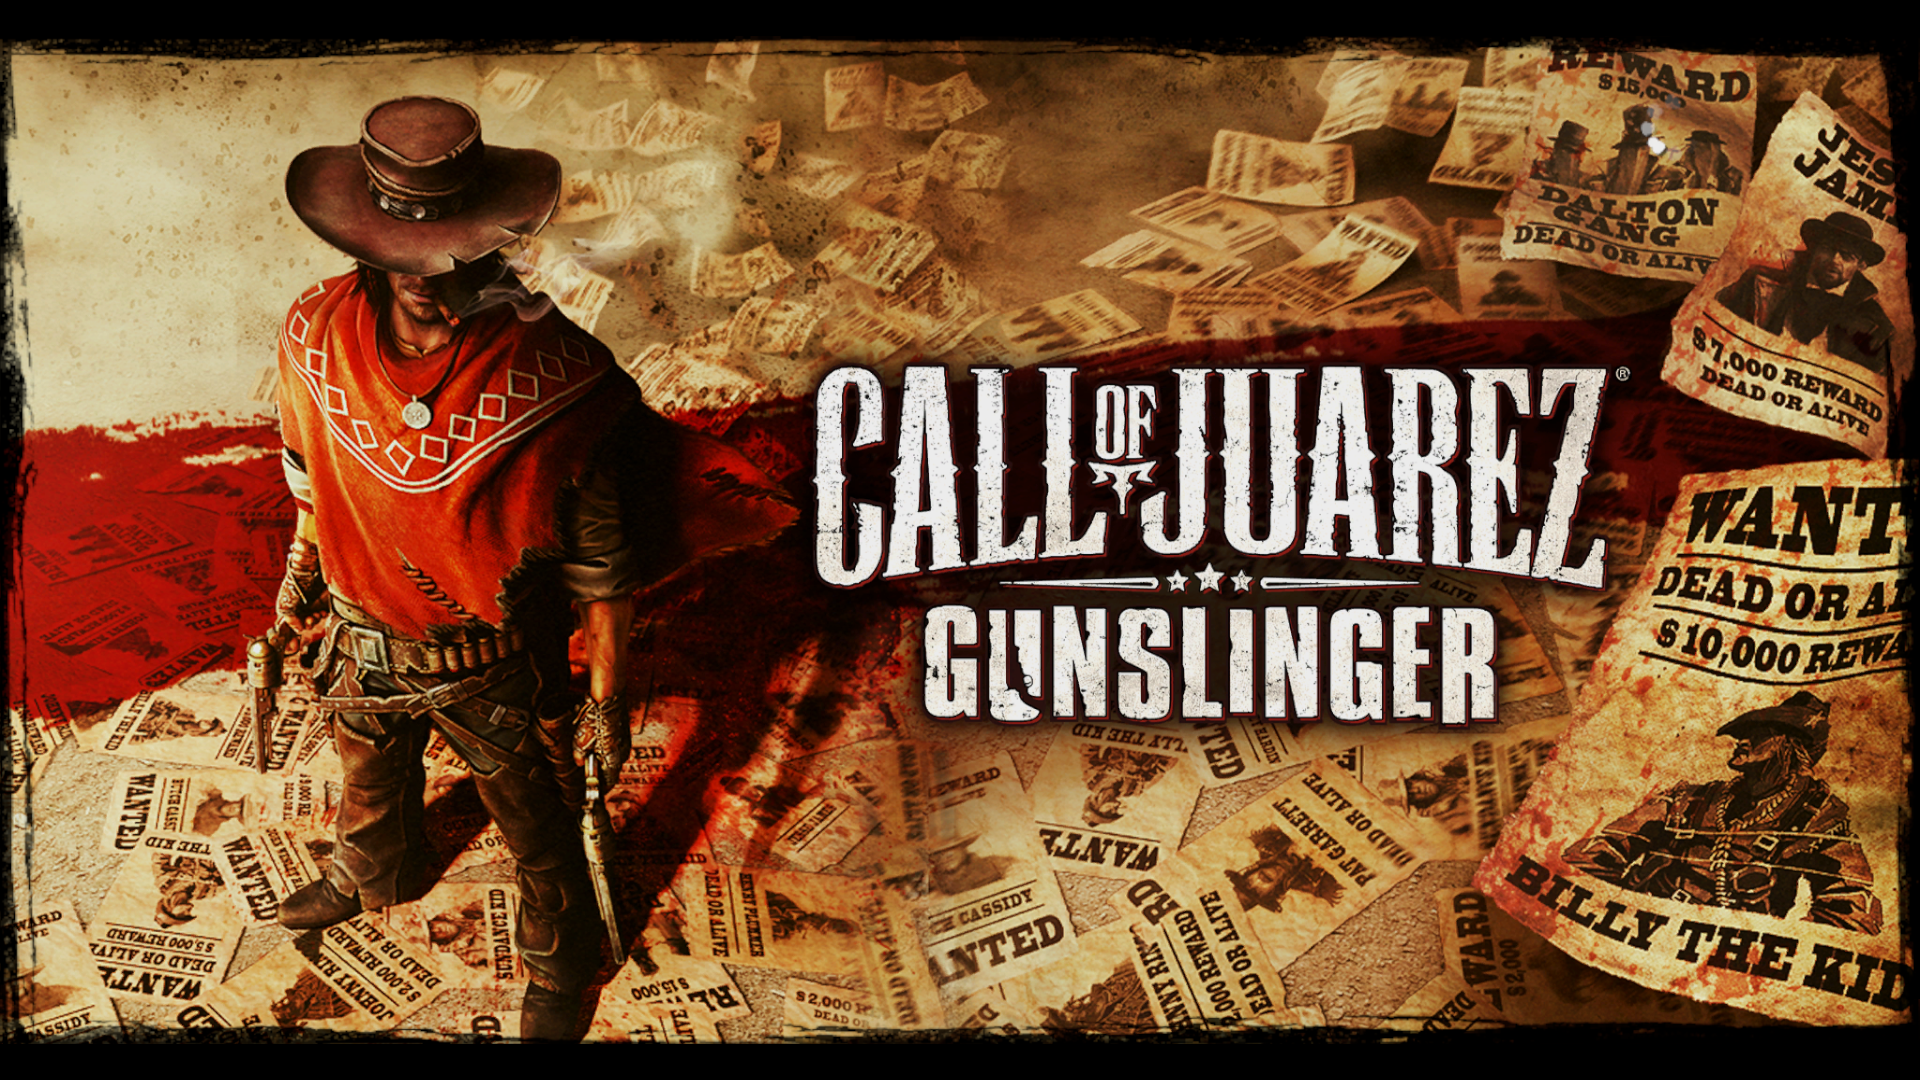 Call of juarez gunslinger steam required